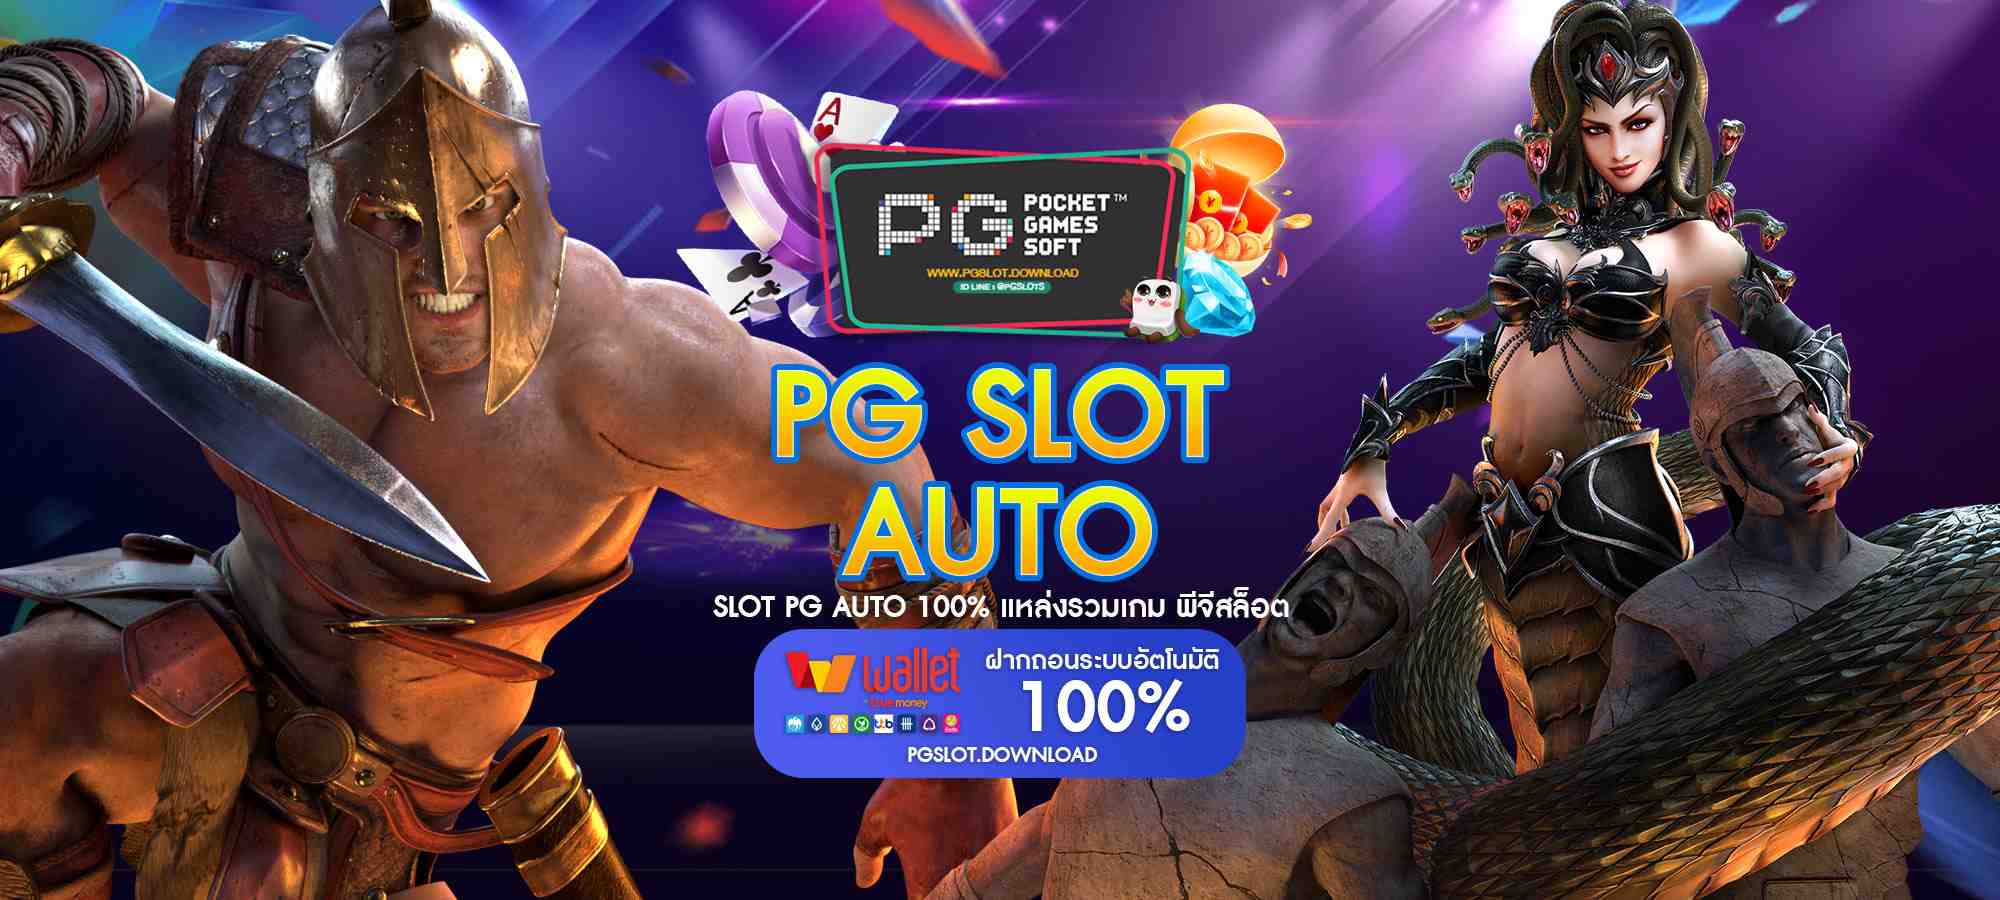 PG Slot Auto